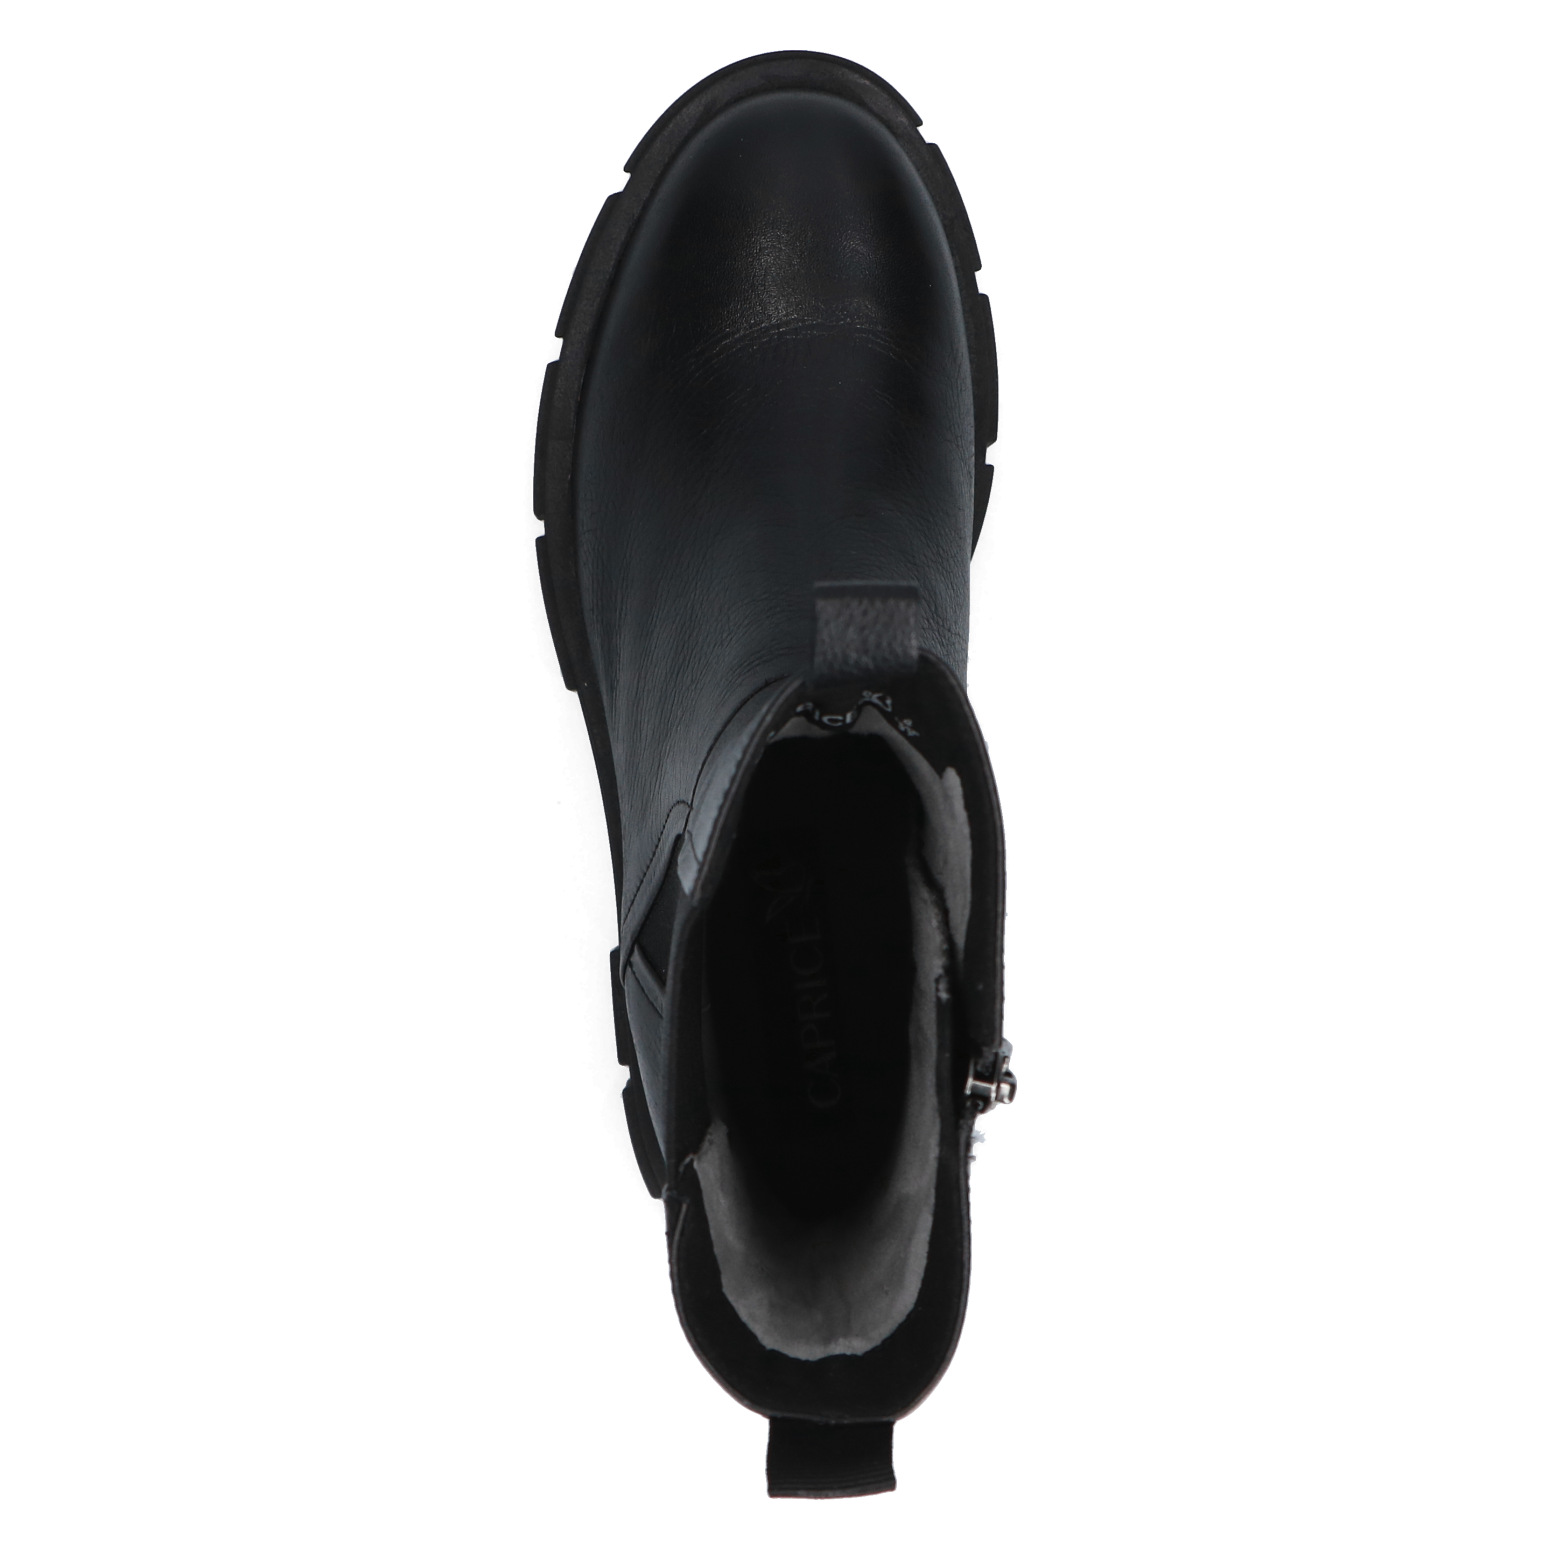 Caprice Chelsea Boot - Black Leather